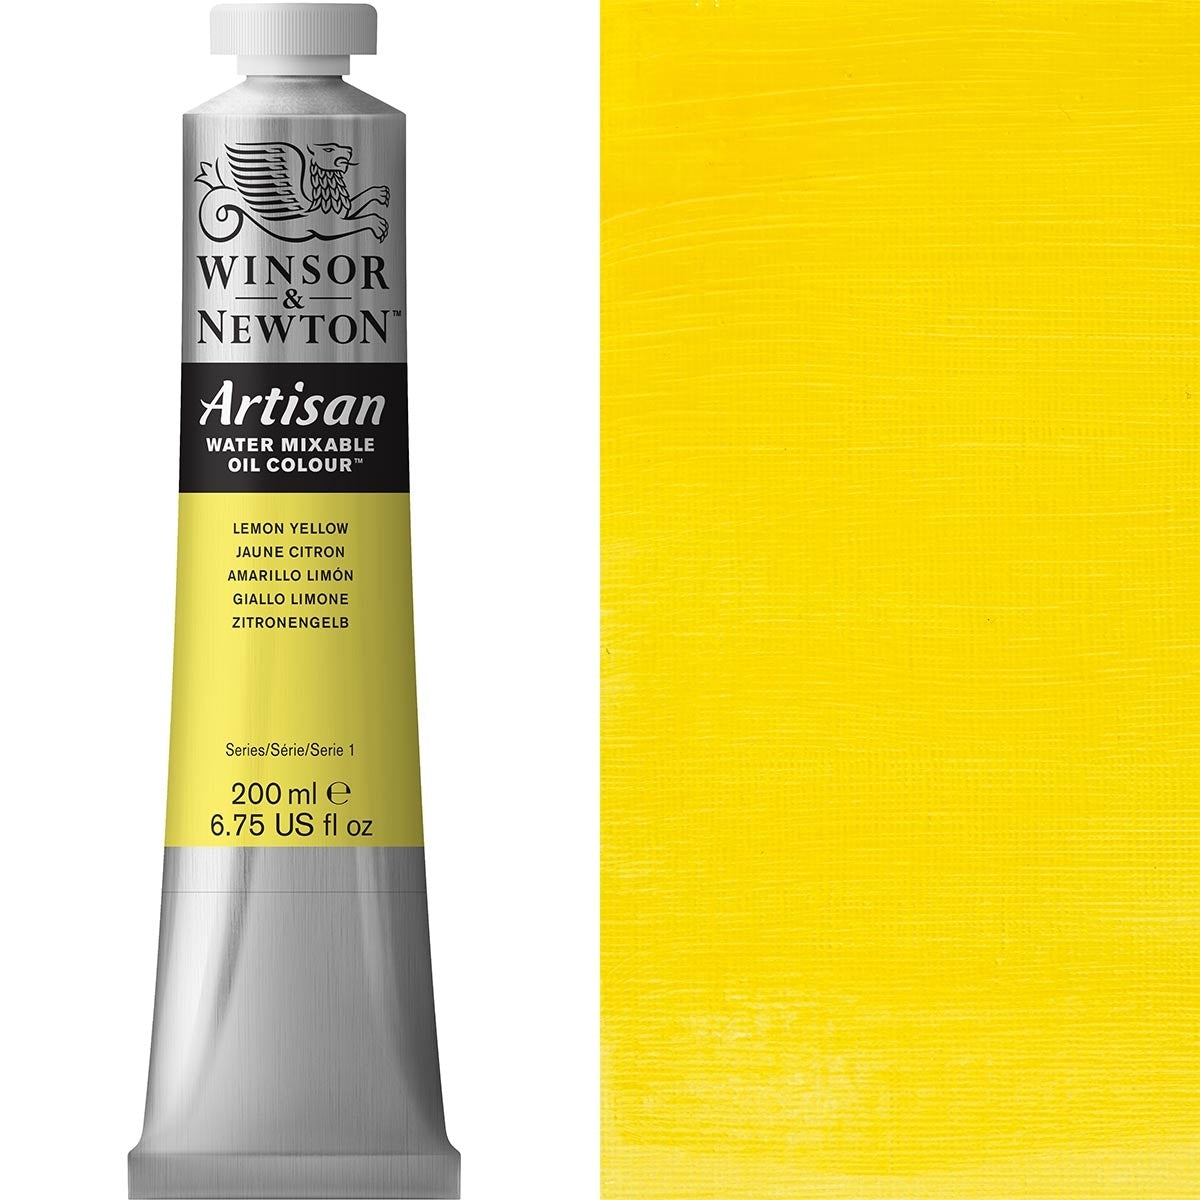 Winsor and Newton - Artisan Oil Colour Watermixable - 200ml - Lemon Yellow